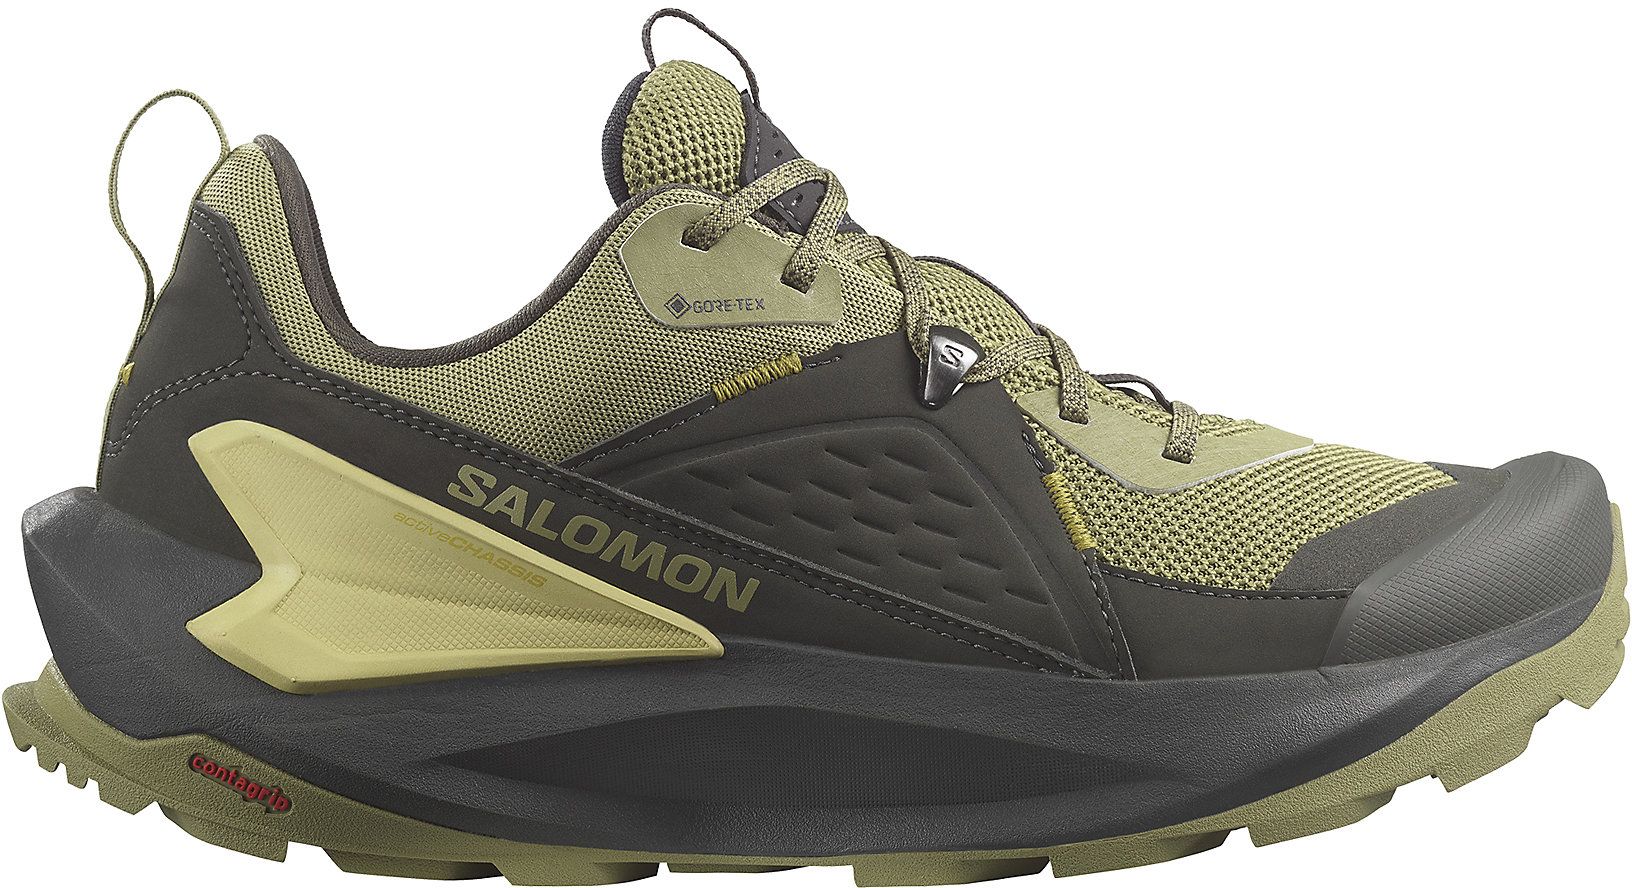 Photos - Trekking Shoes Salomon Men's Elixir GTX Shoe, Size 11.5, Black/Dried Herb/Southern 23SALM 